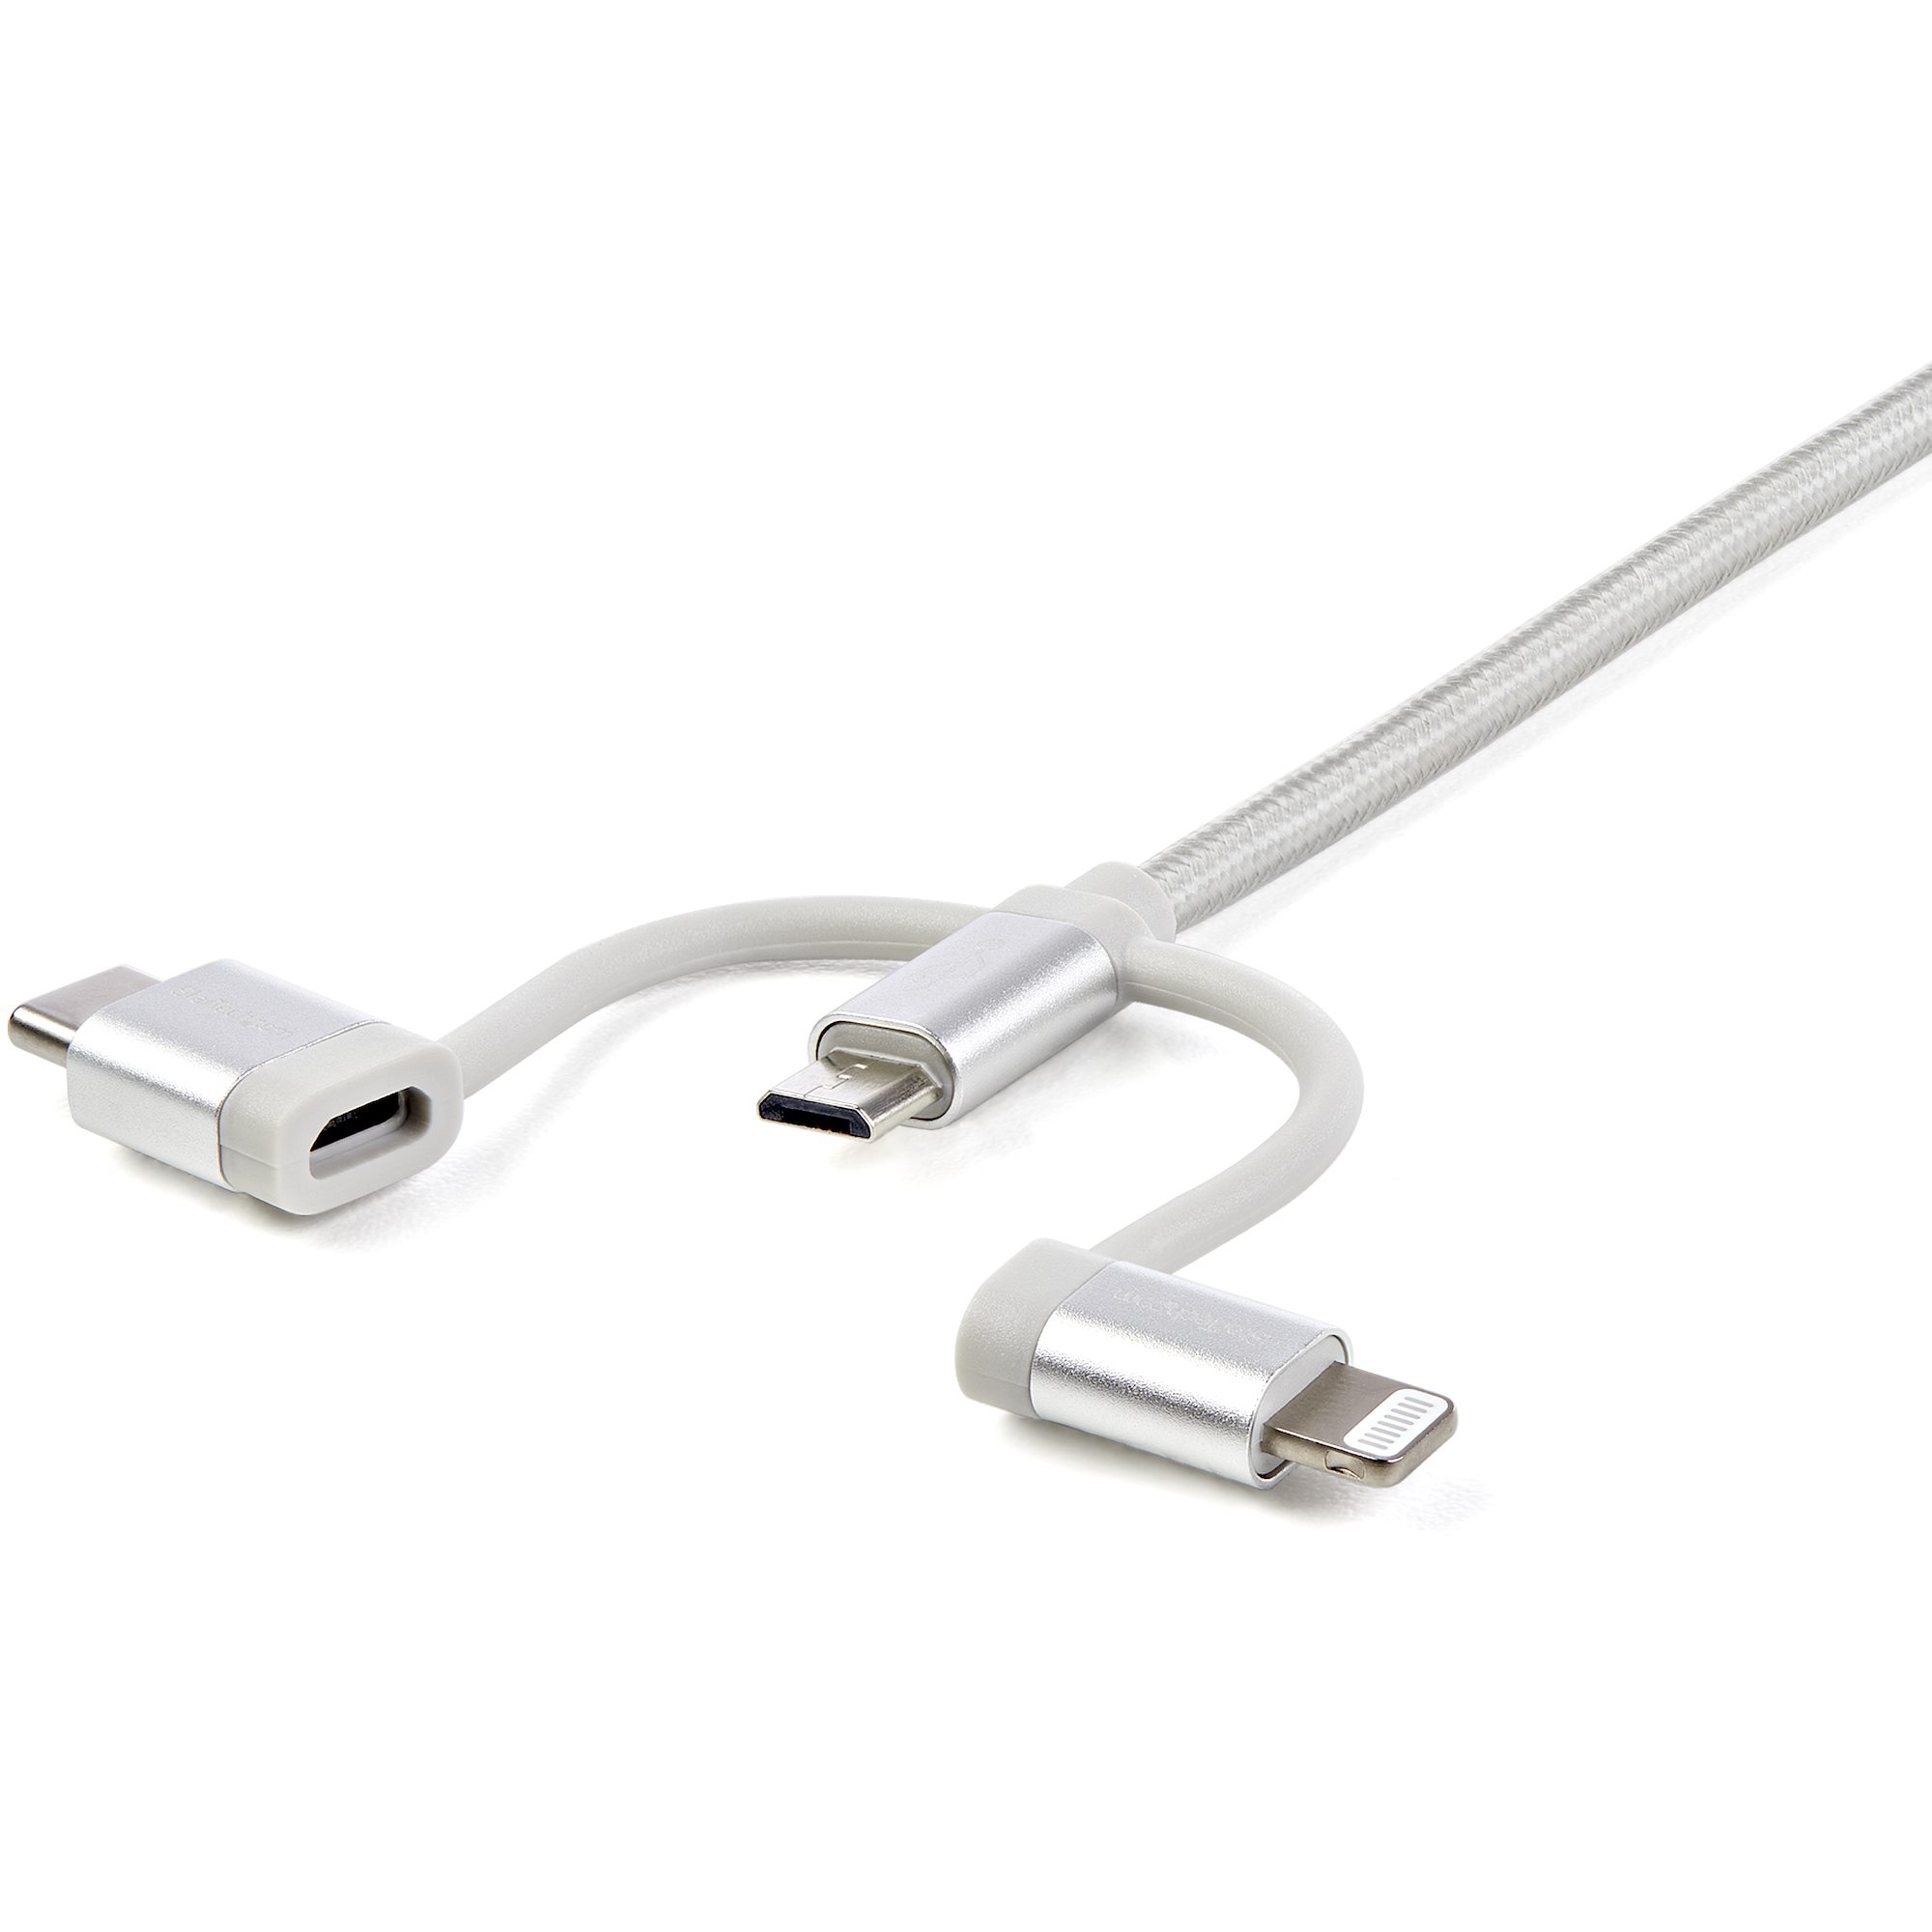 USB-Ladekabel 3 in 1 Anschluss iPhone 4 MICRO USB iPhone 5 